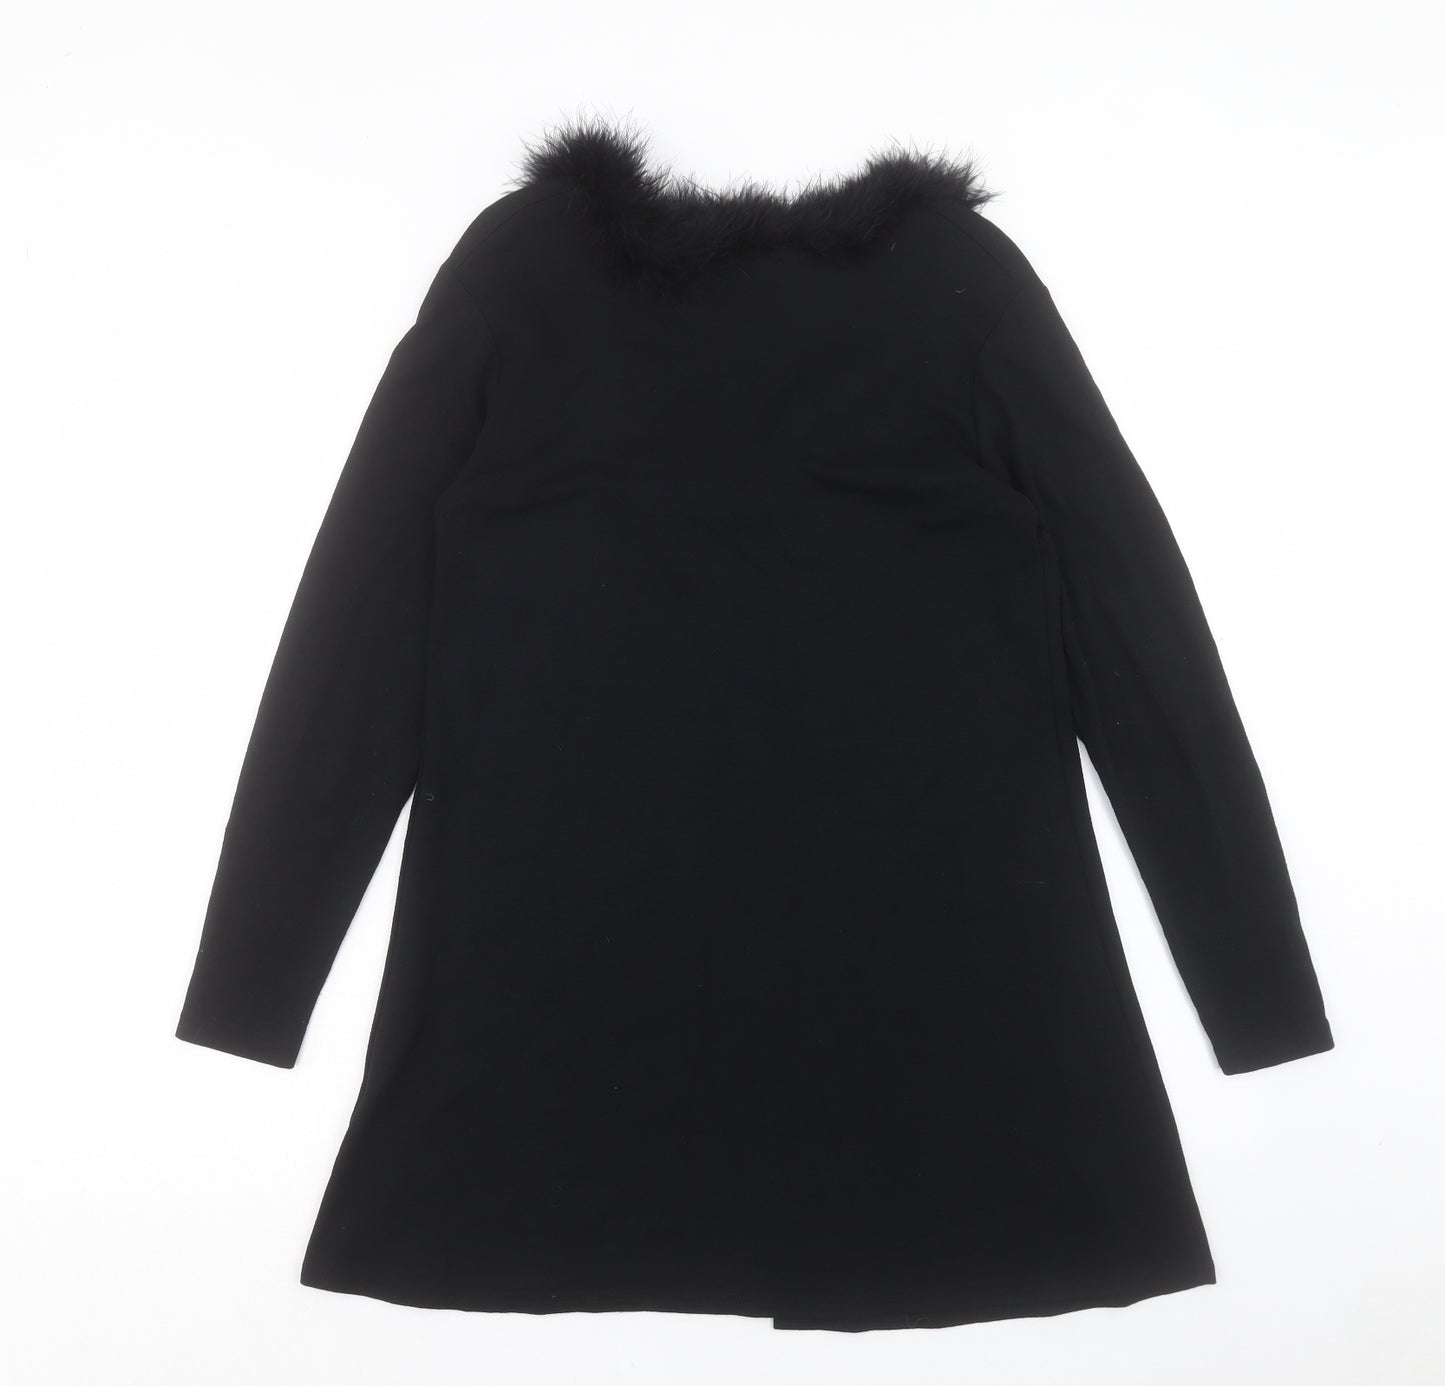 Ozone Womens Black V-Neck Viscose Cardigan Jumper Size S - Size S/M